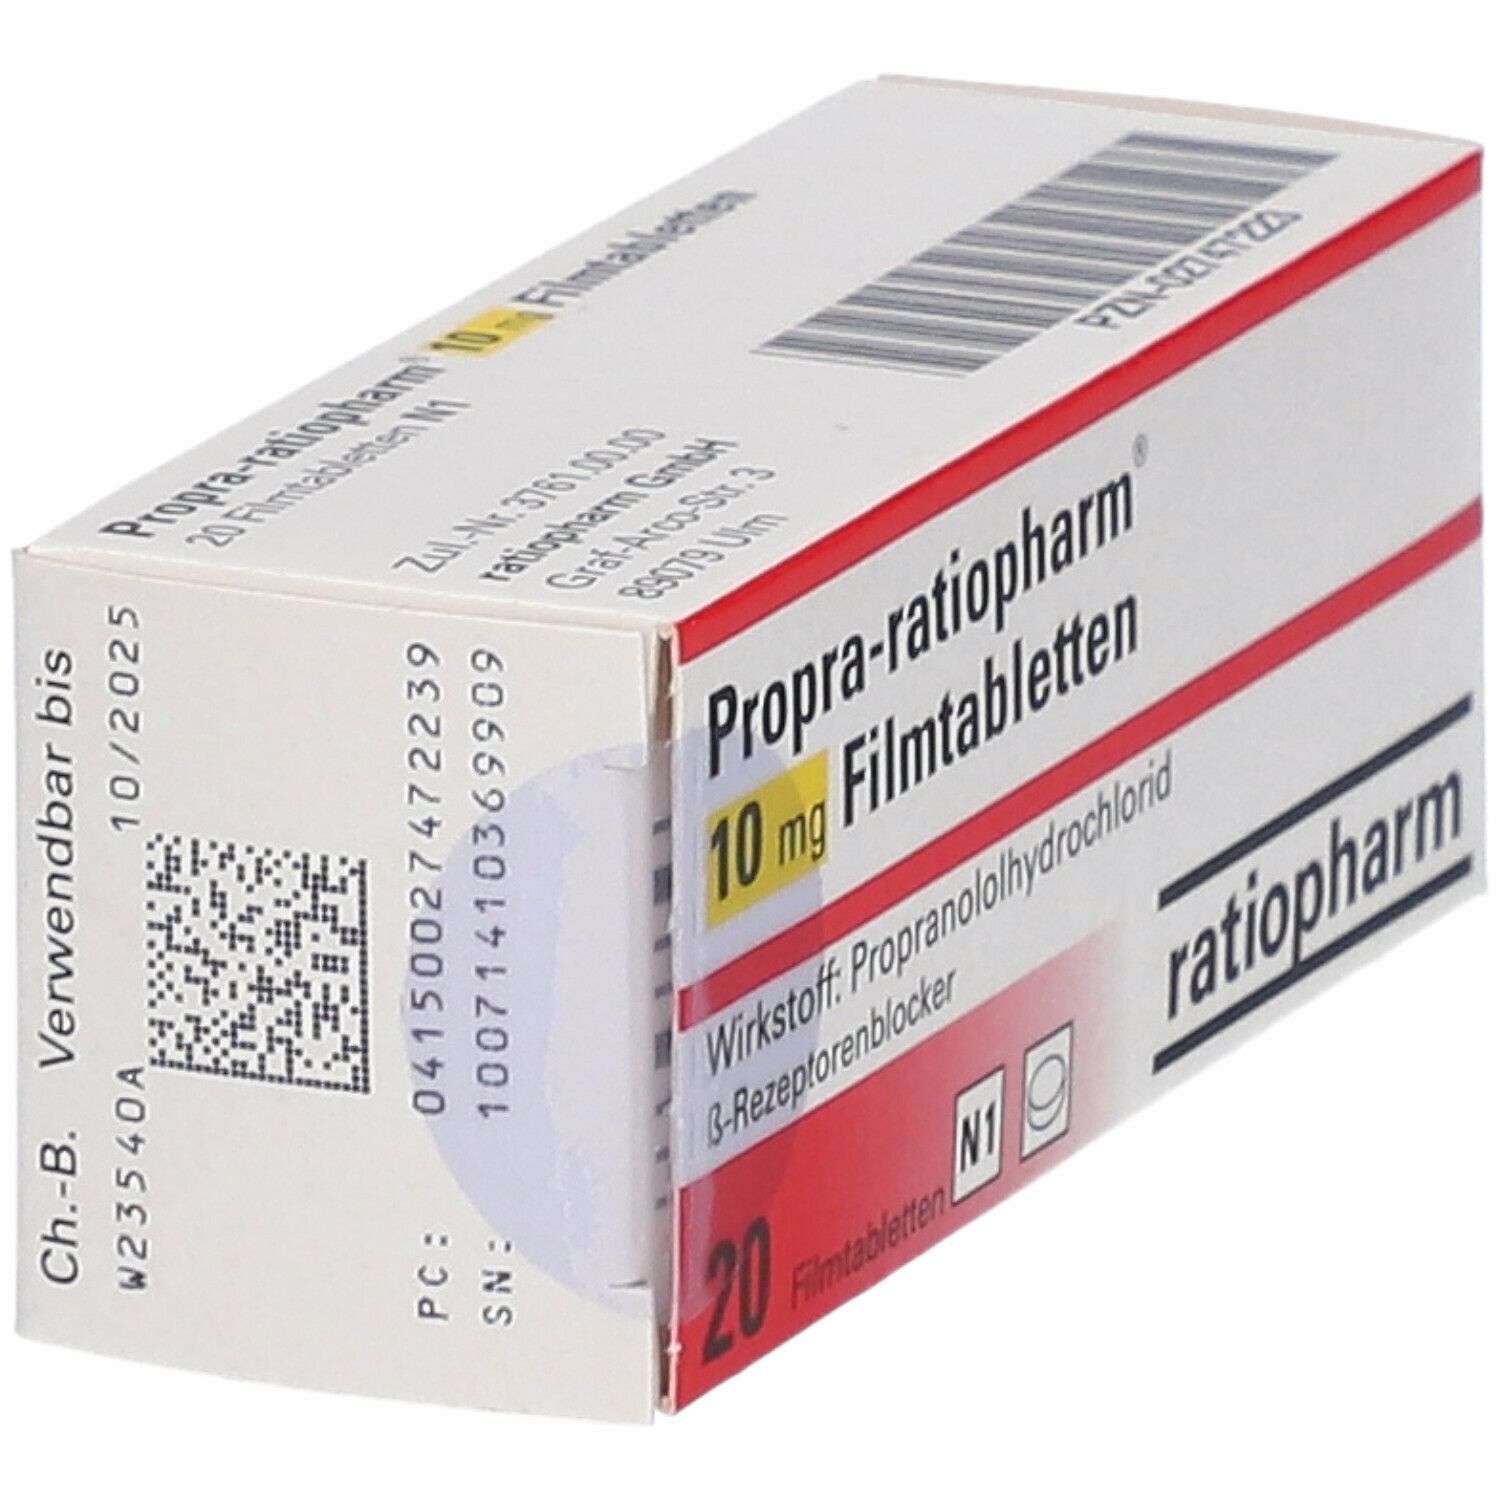 Propra-ratiopharm® 10 mg